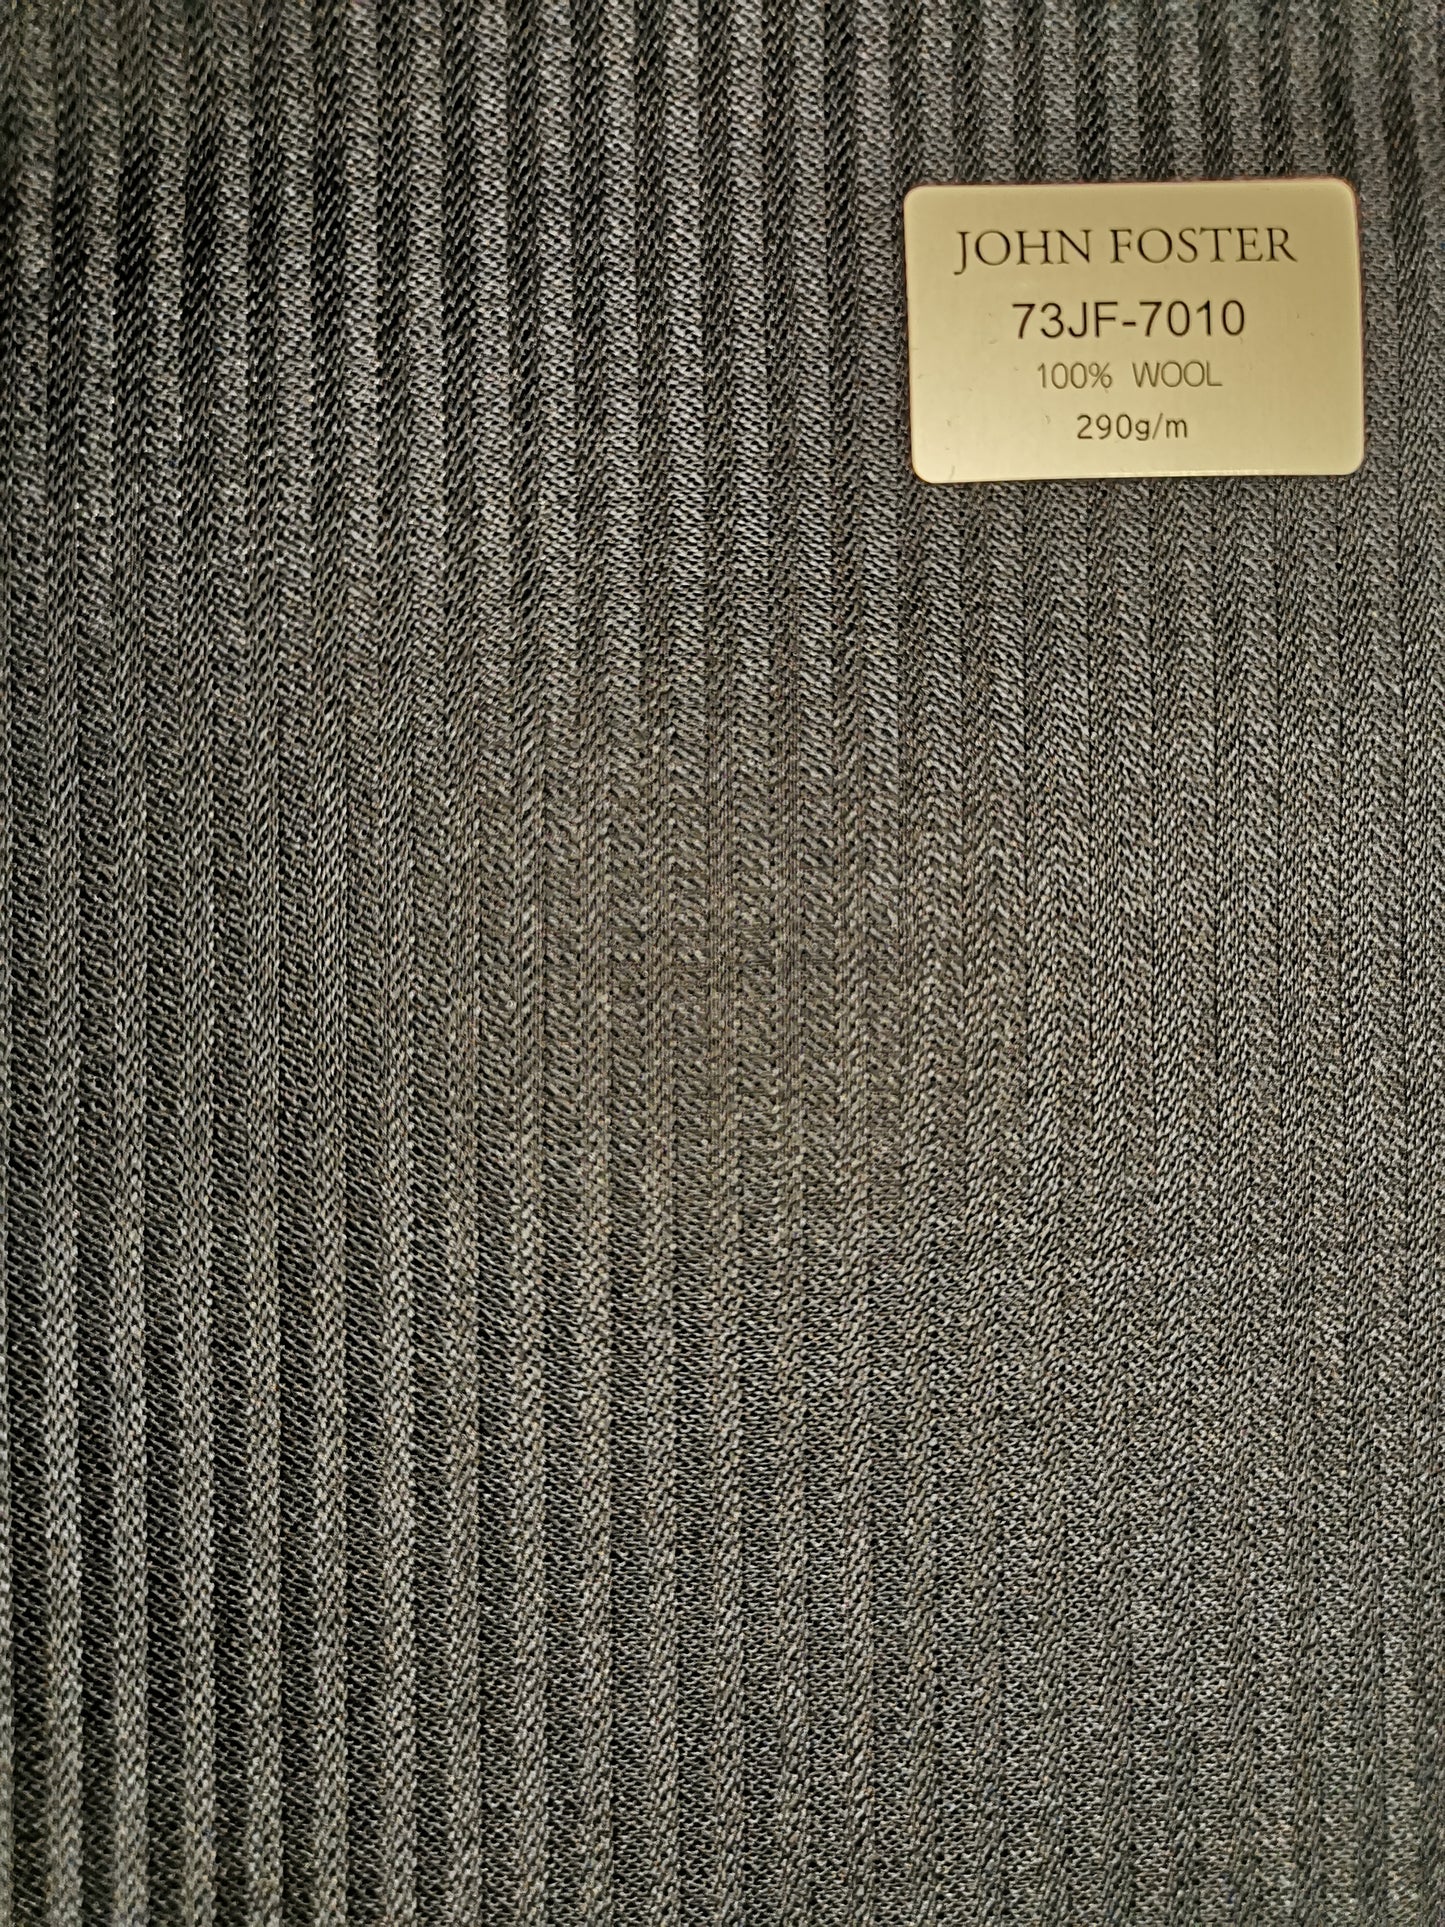 Brand : John Foster Textile ID : 73JF-7010